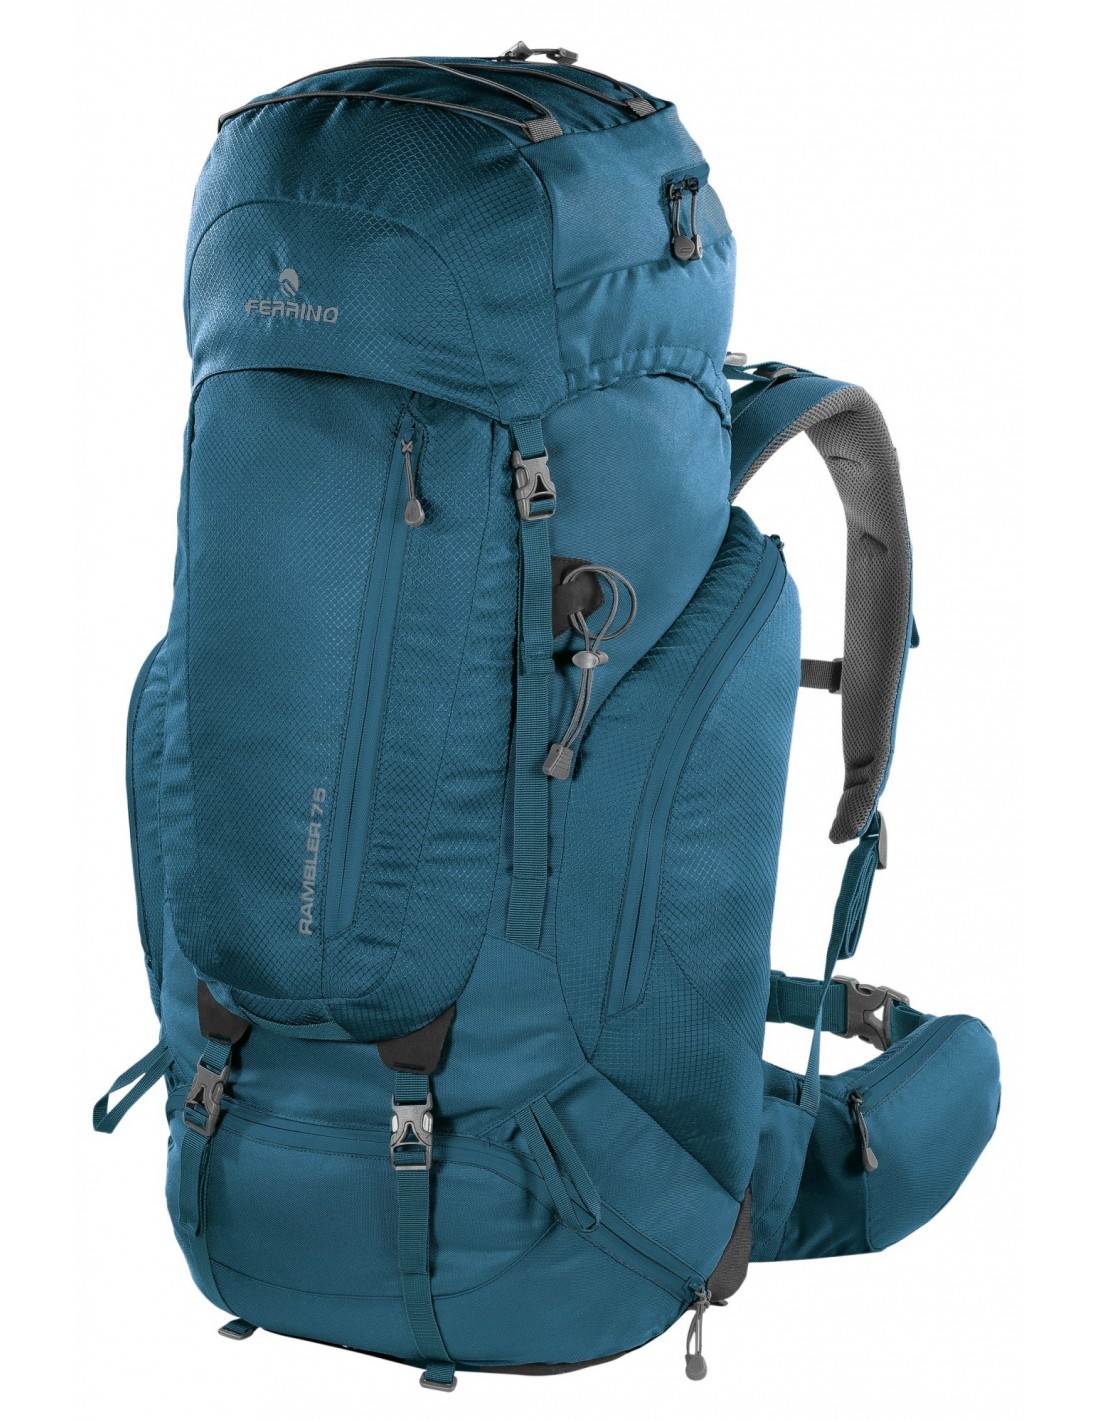 Ferrino BACKPACK RAMBLER 75 (BLUE) Rucksackart - Wandern & Trekking, Rucksackfarbe - Blau, Rucksackvolumen - 71 - 75 Liter, von Ferrino